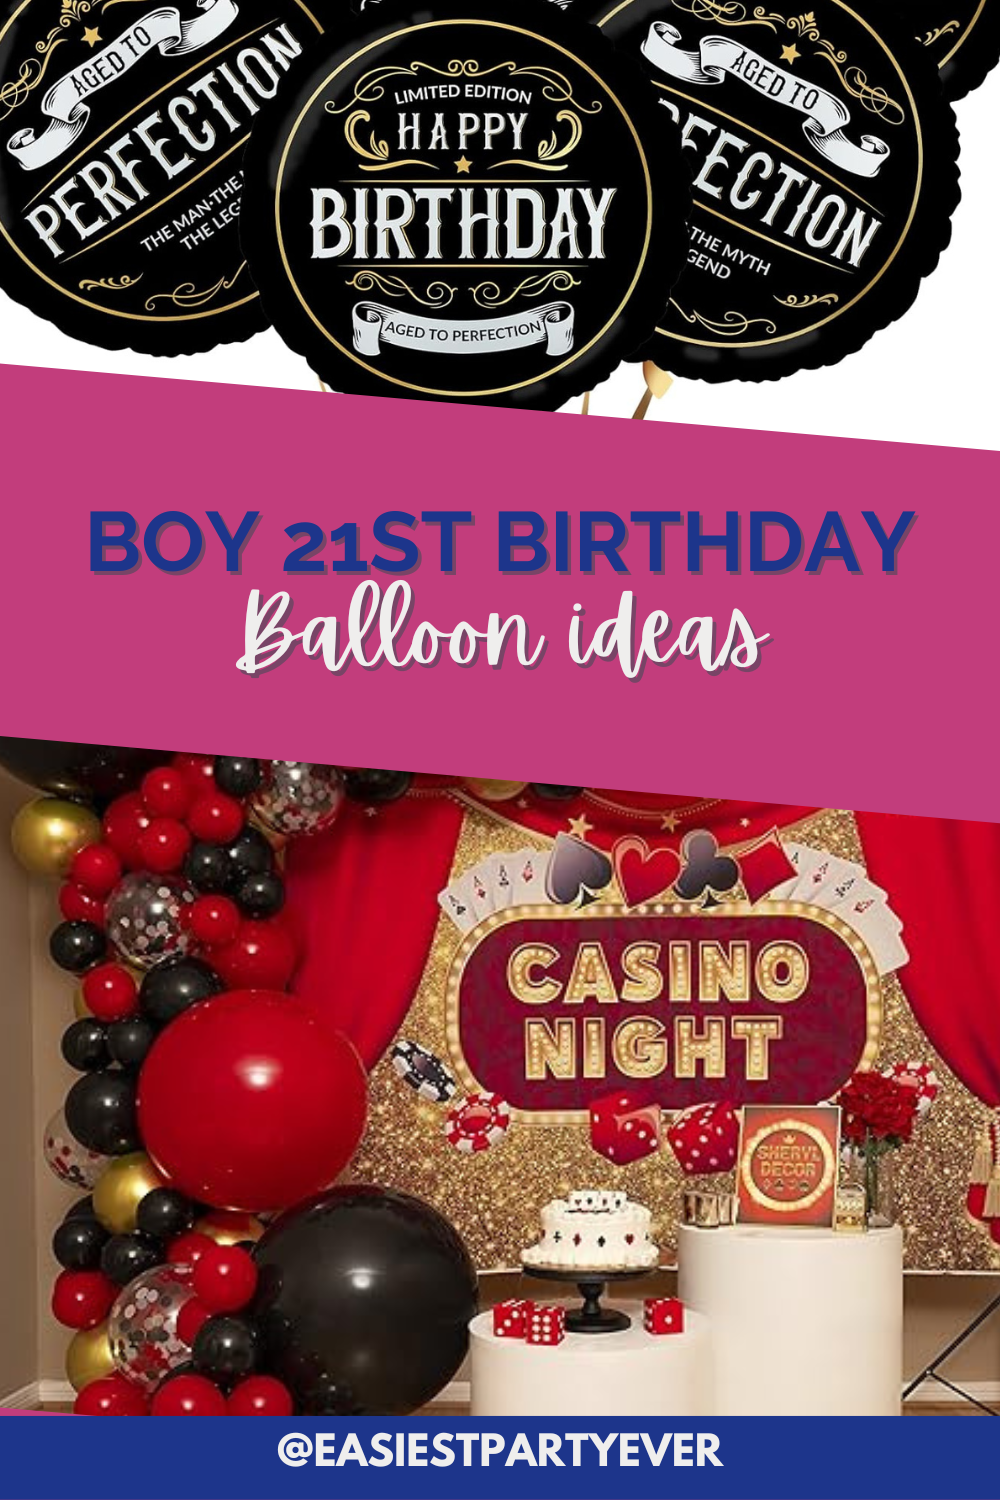 The best boy 21st Birthday balloon ideas